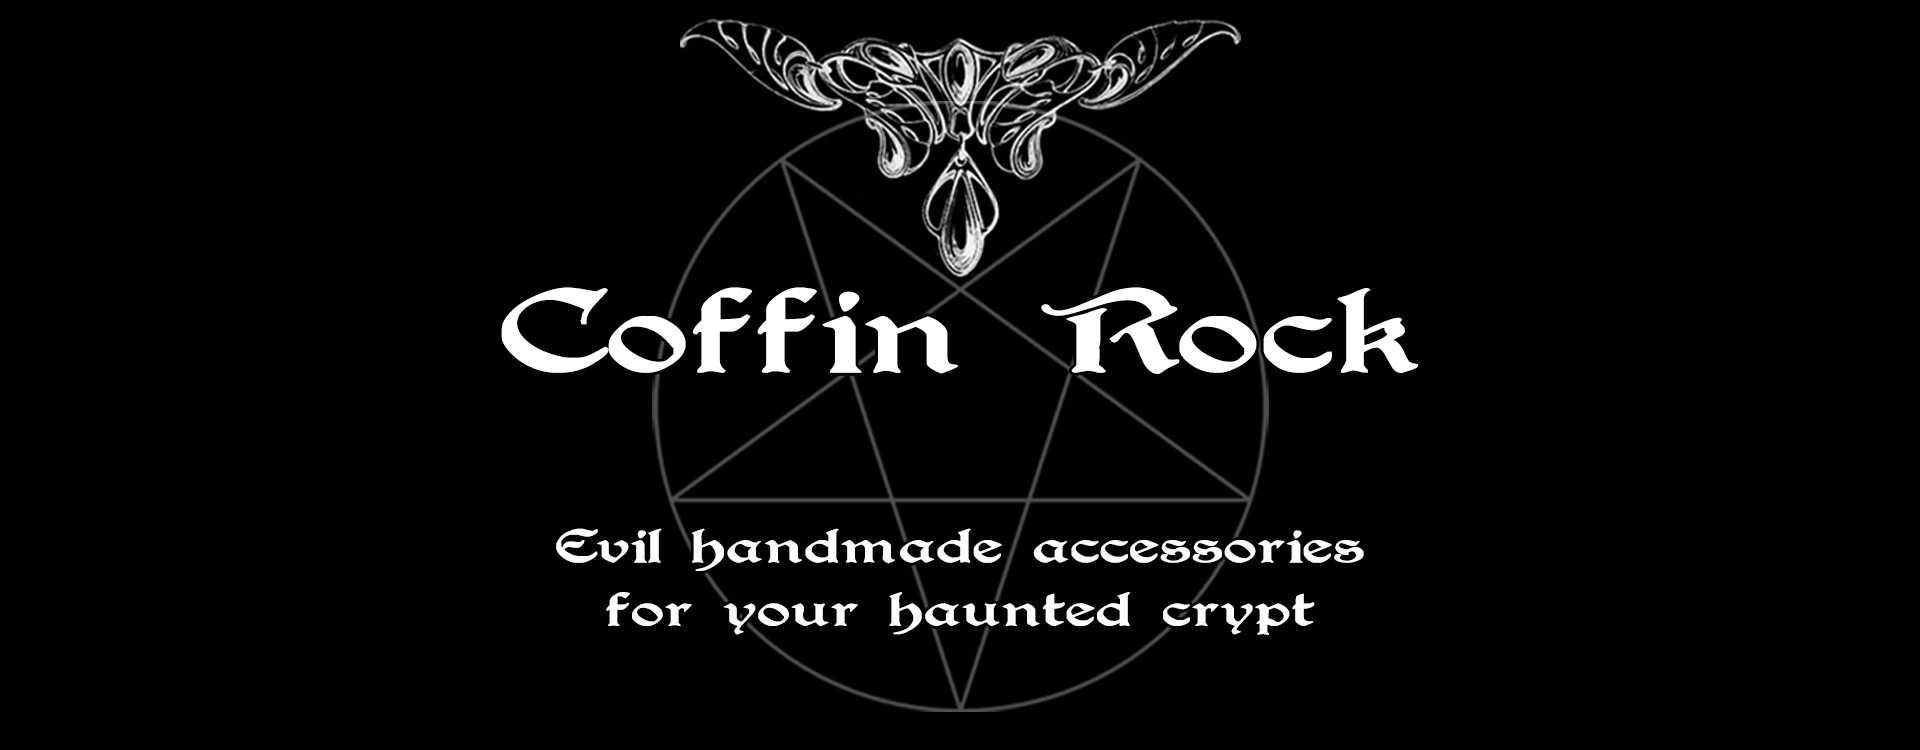 coffin rock